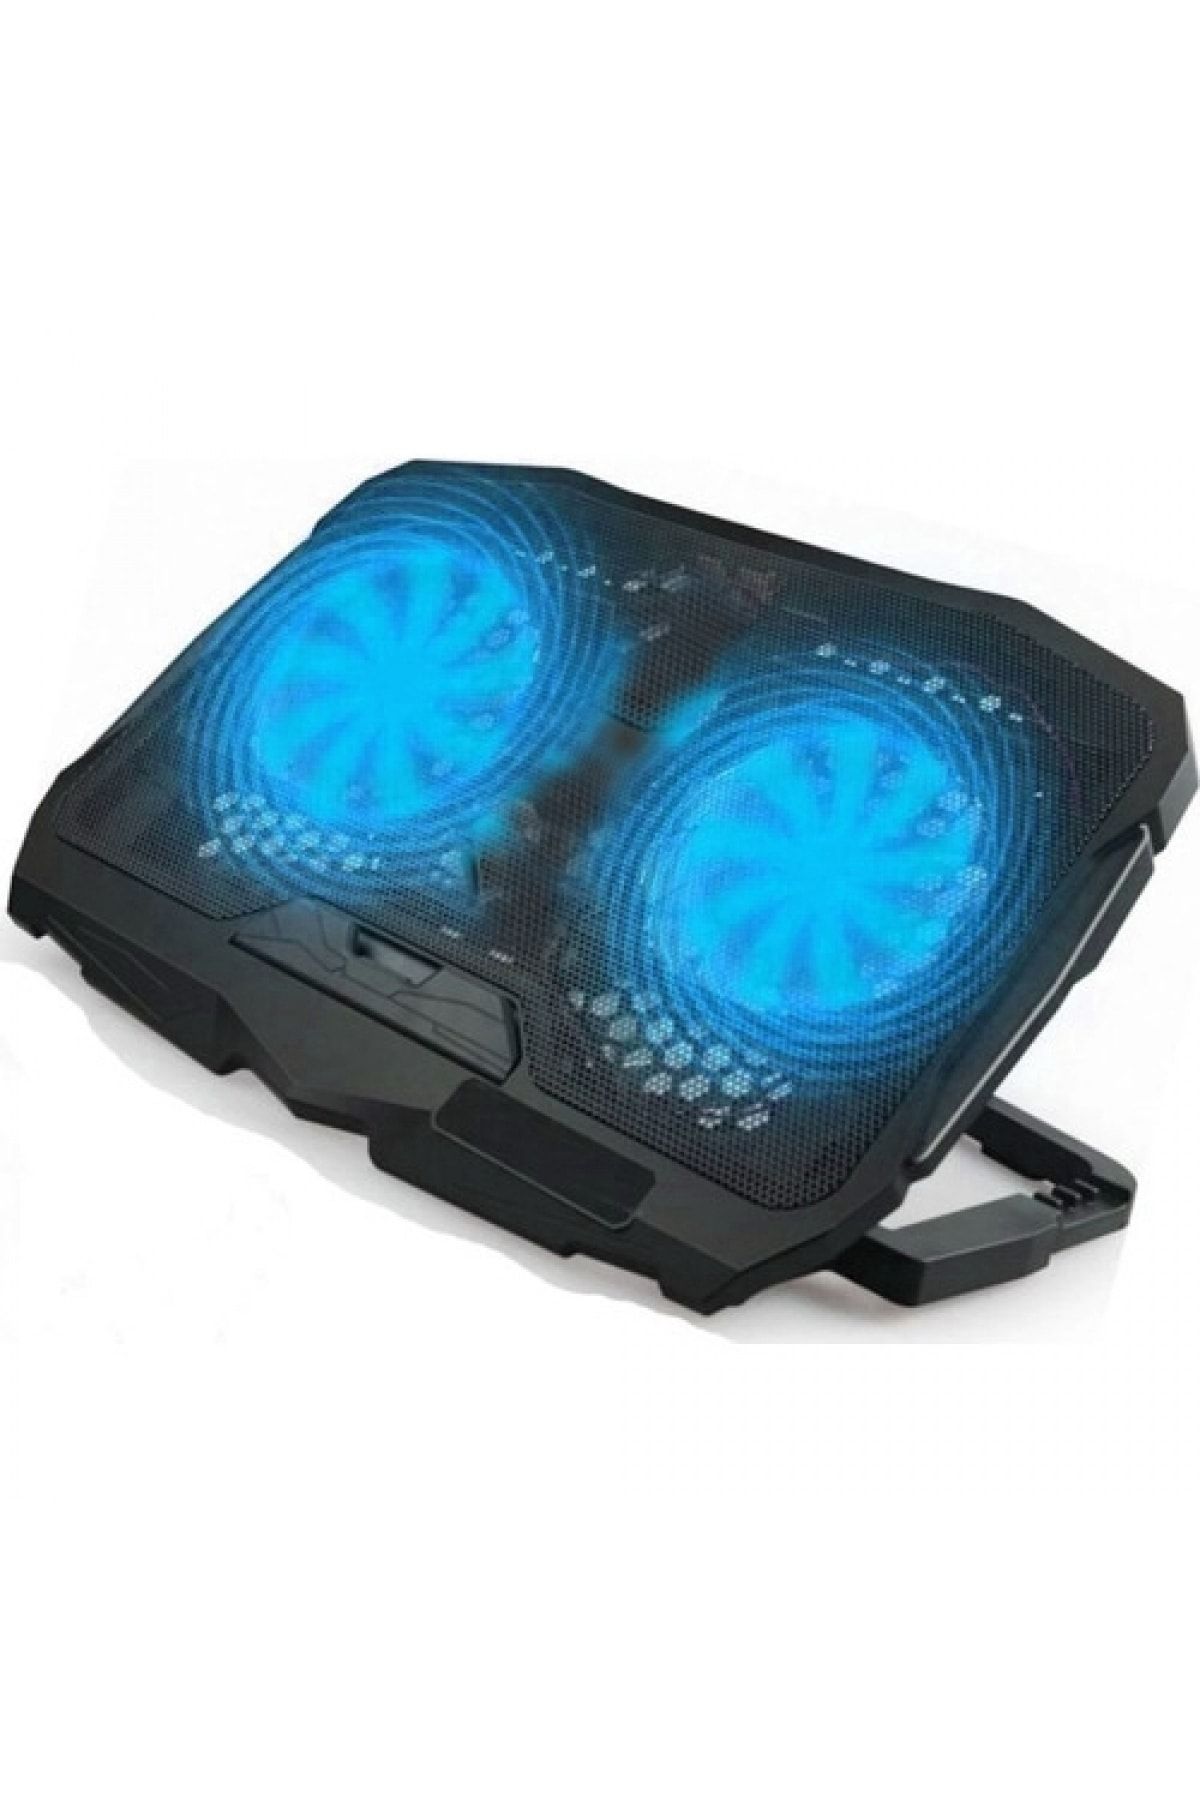 versatile Vrc-d8 2fan Ayarlanabilir Laptop Gaming Soğutucu Cooler